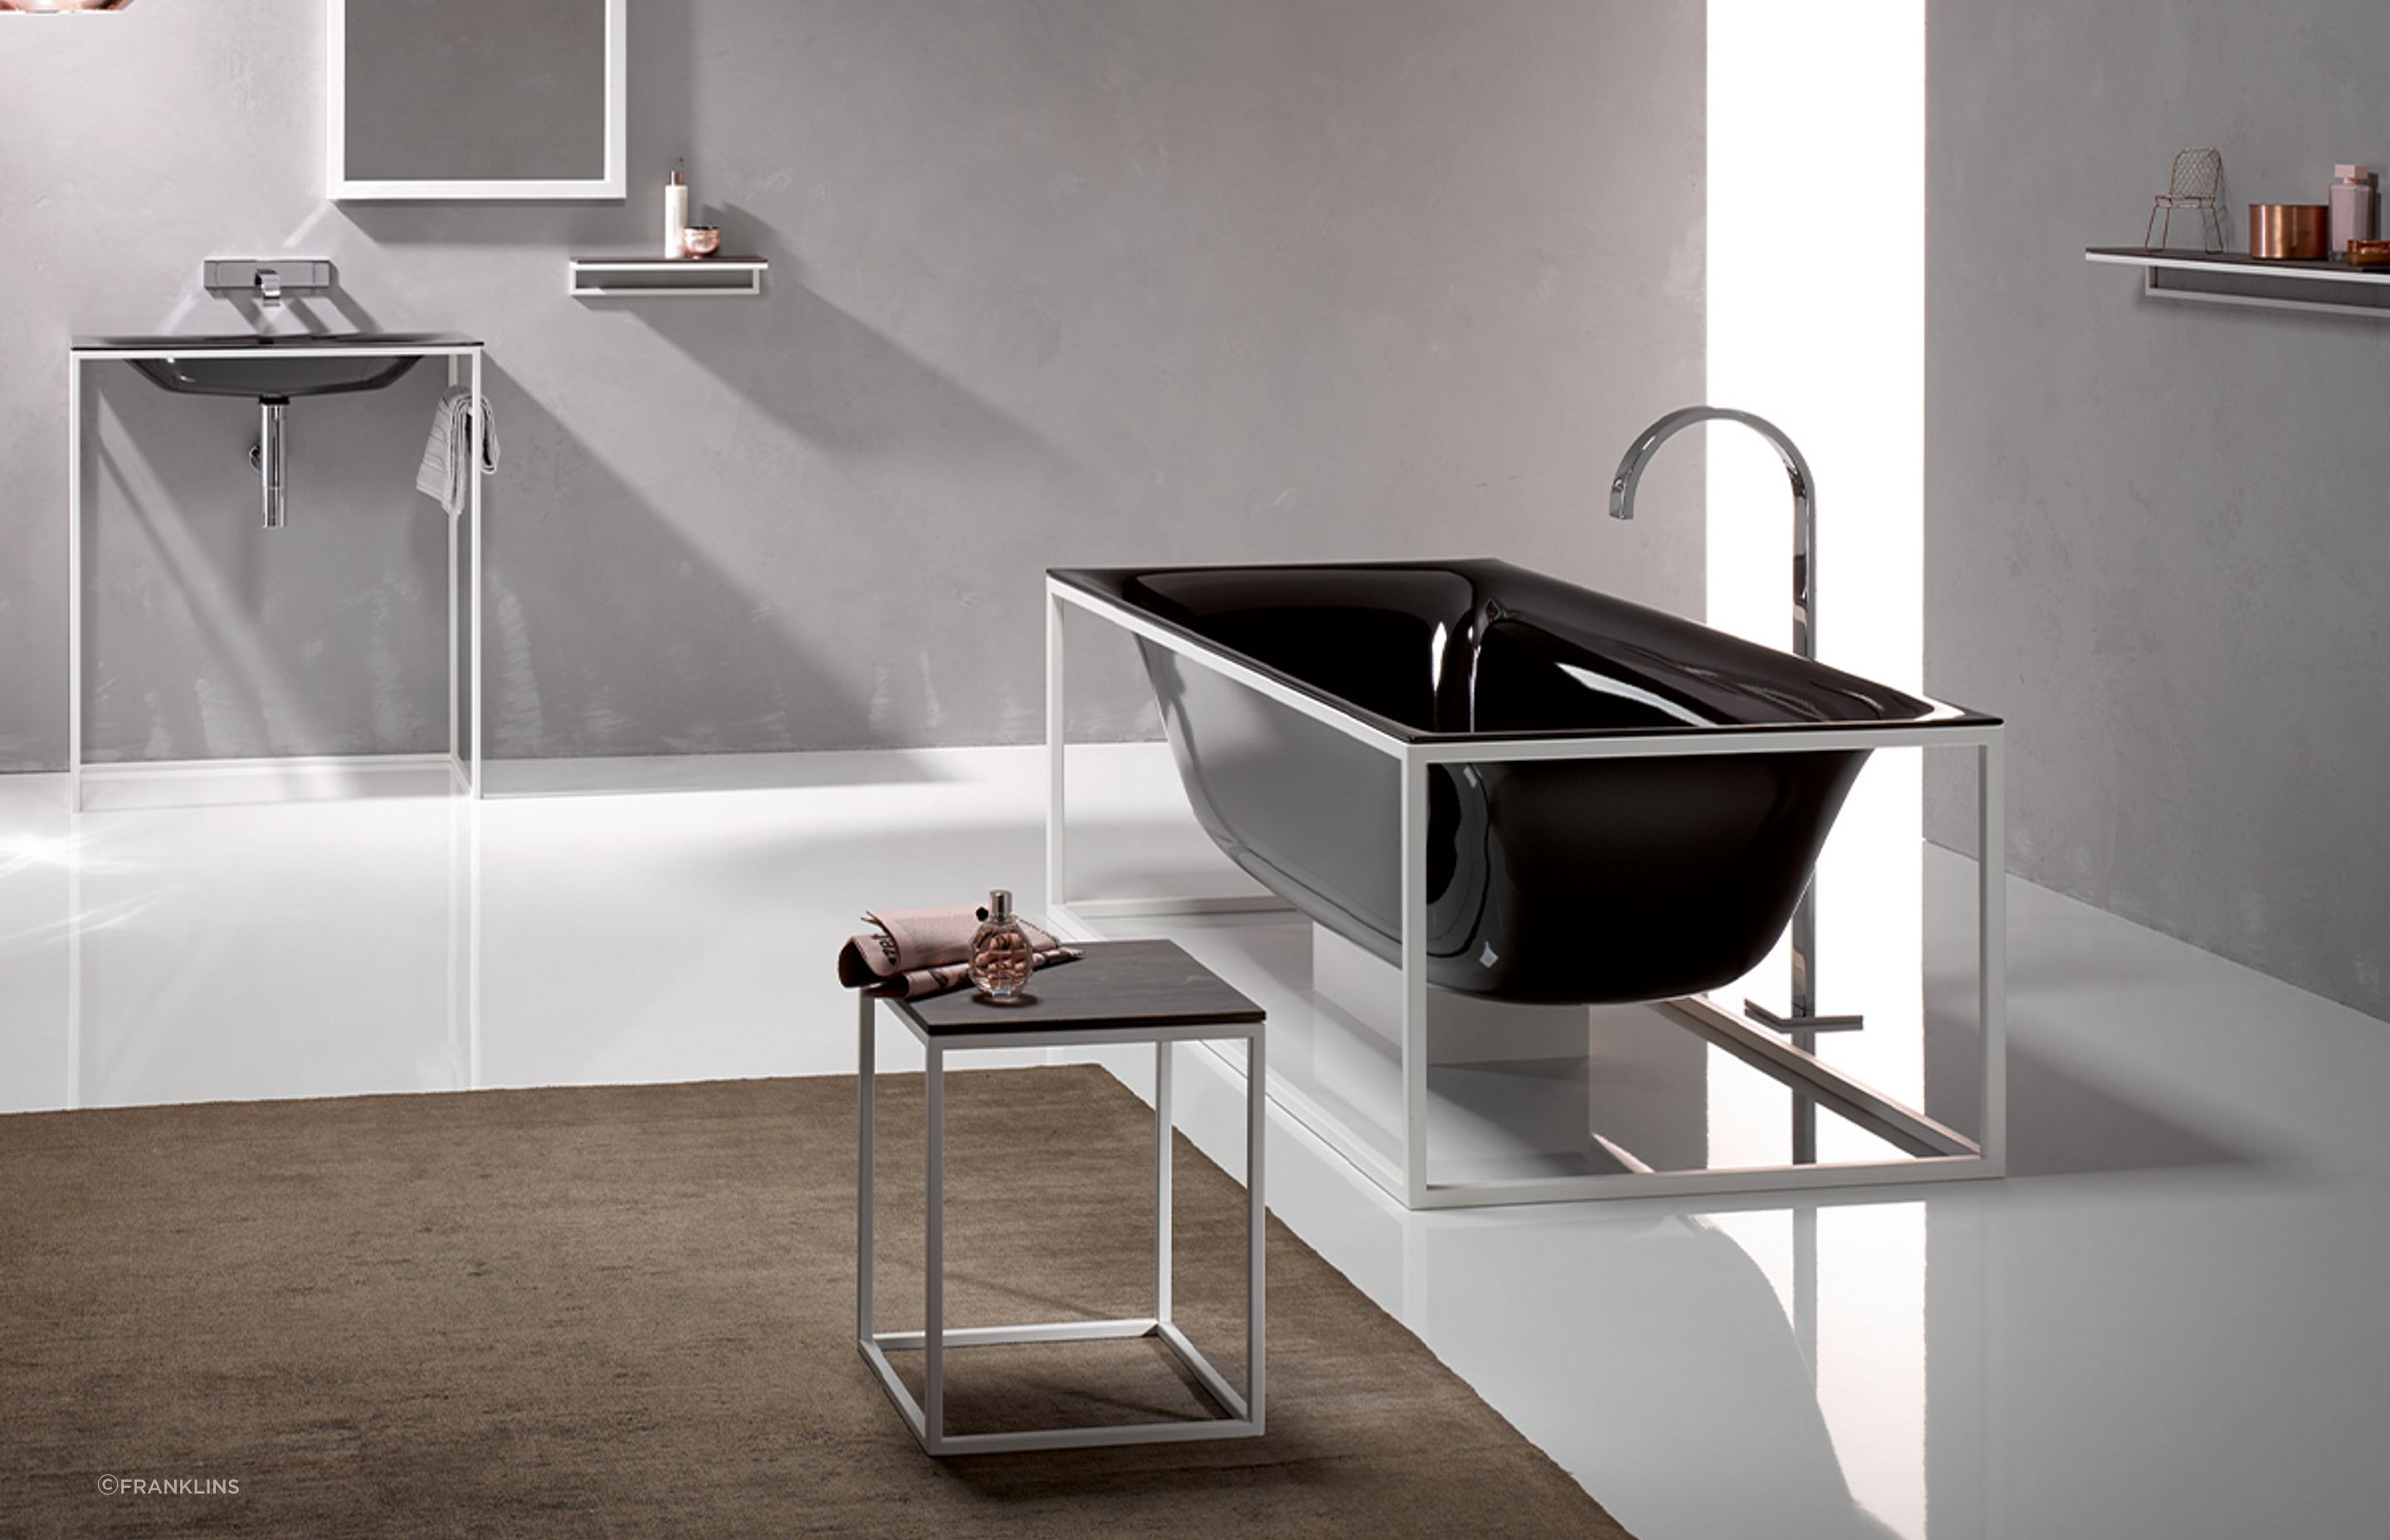 The beautiful BetteLux Freestanding Bath and its stunning organic shape with glazed titanium steel